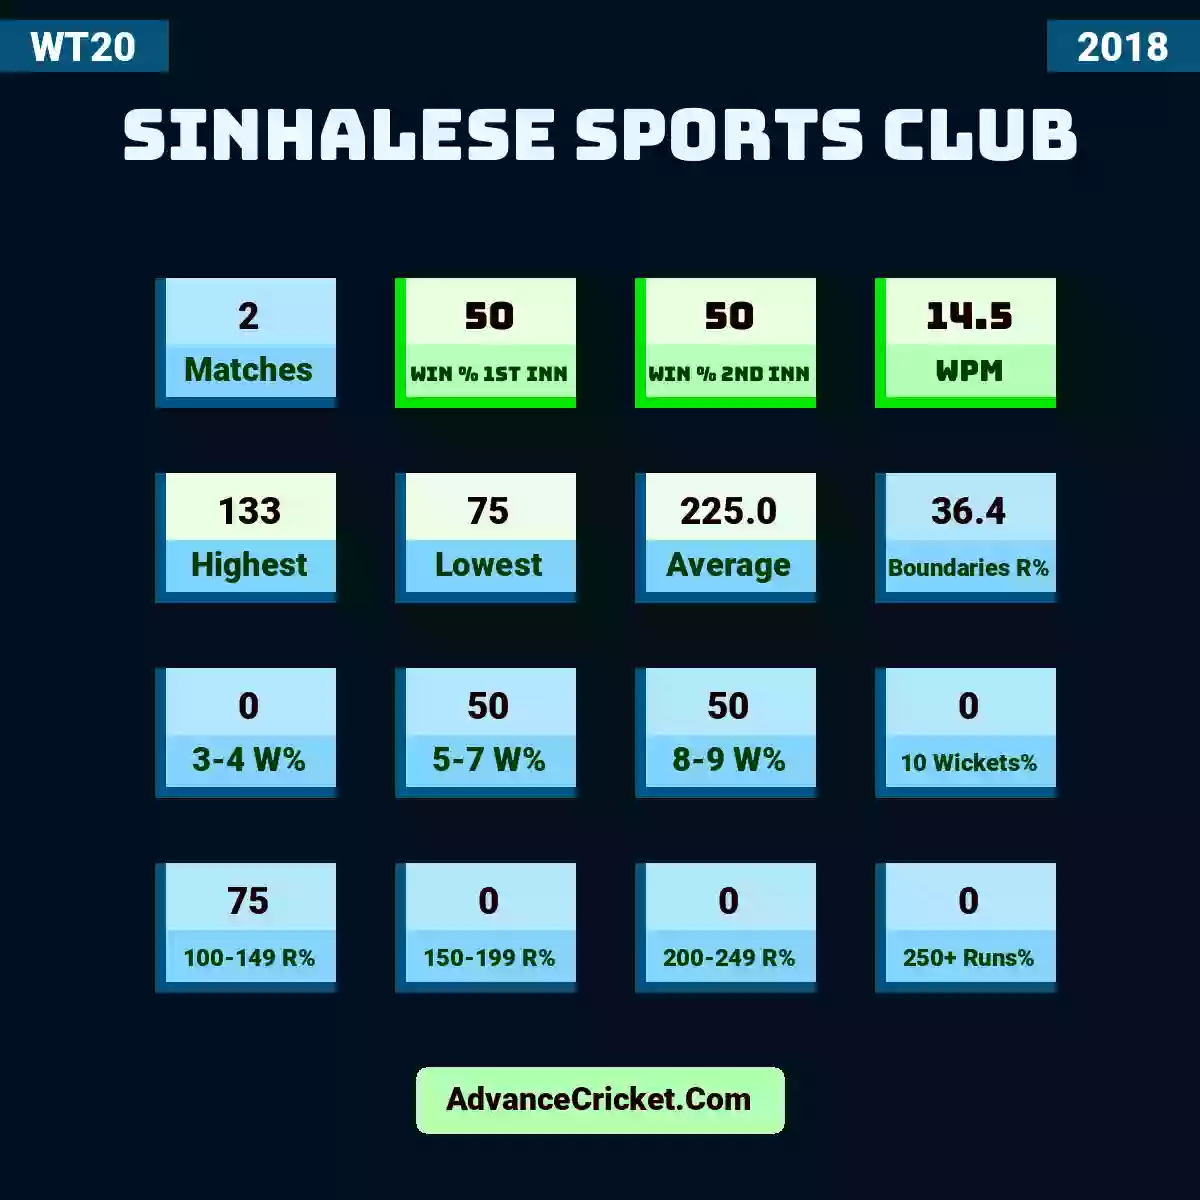 Image showing Sinhalese Sports Club with Matches: 2, Win % 1st Inn: 50, Win % 2nd Inn: 50, WPM: 14.5, Highest: 133, Lowest: 75, Average: 225.0, Boundaries R%: 36.4, 3-4 W%: 0, 5-7 W%: 50, 8-9 W%: 50, 10 Wickets%: 0, 100-149 R%: 75, 150-199 R%: 0, 200-249 R%: 0, 250+ Runs%: 0.